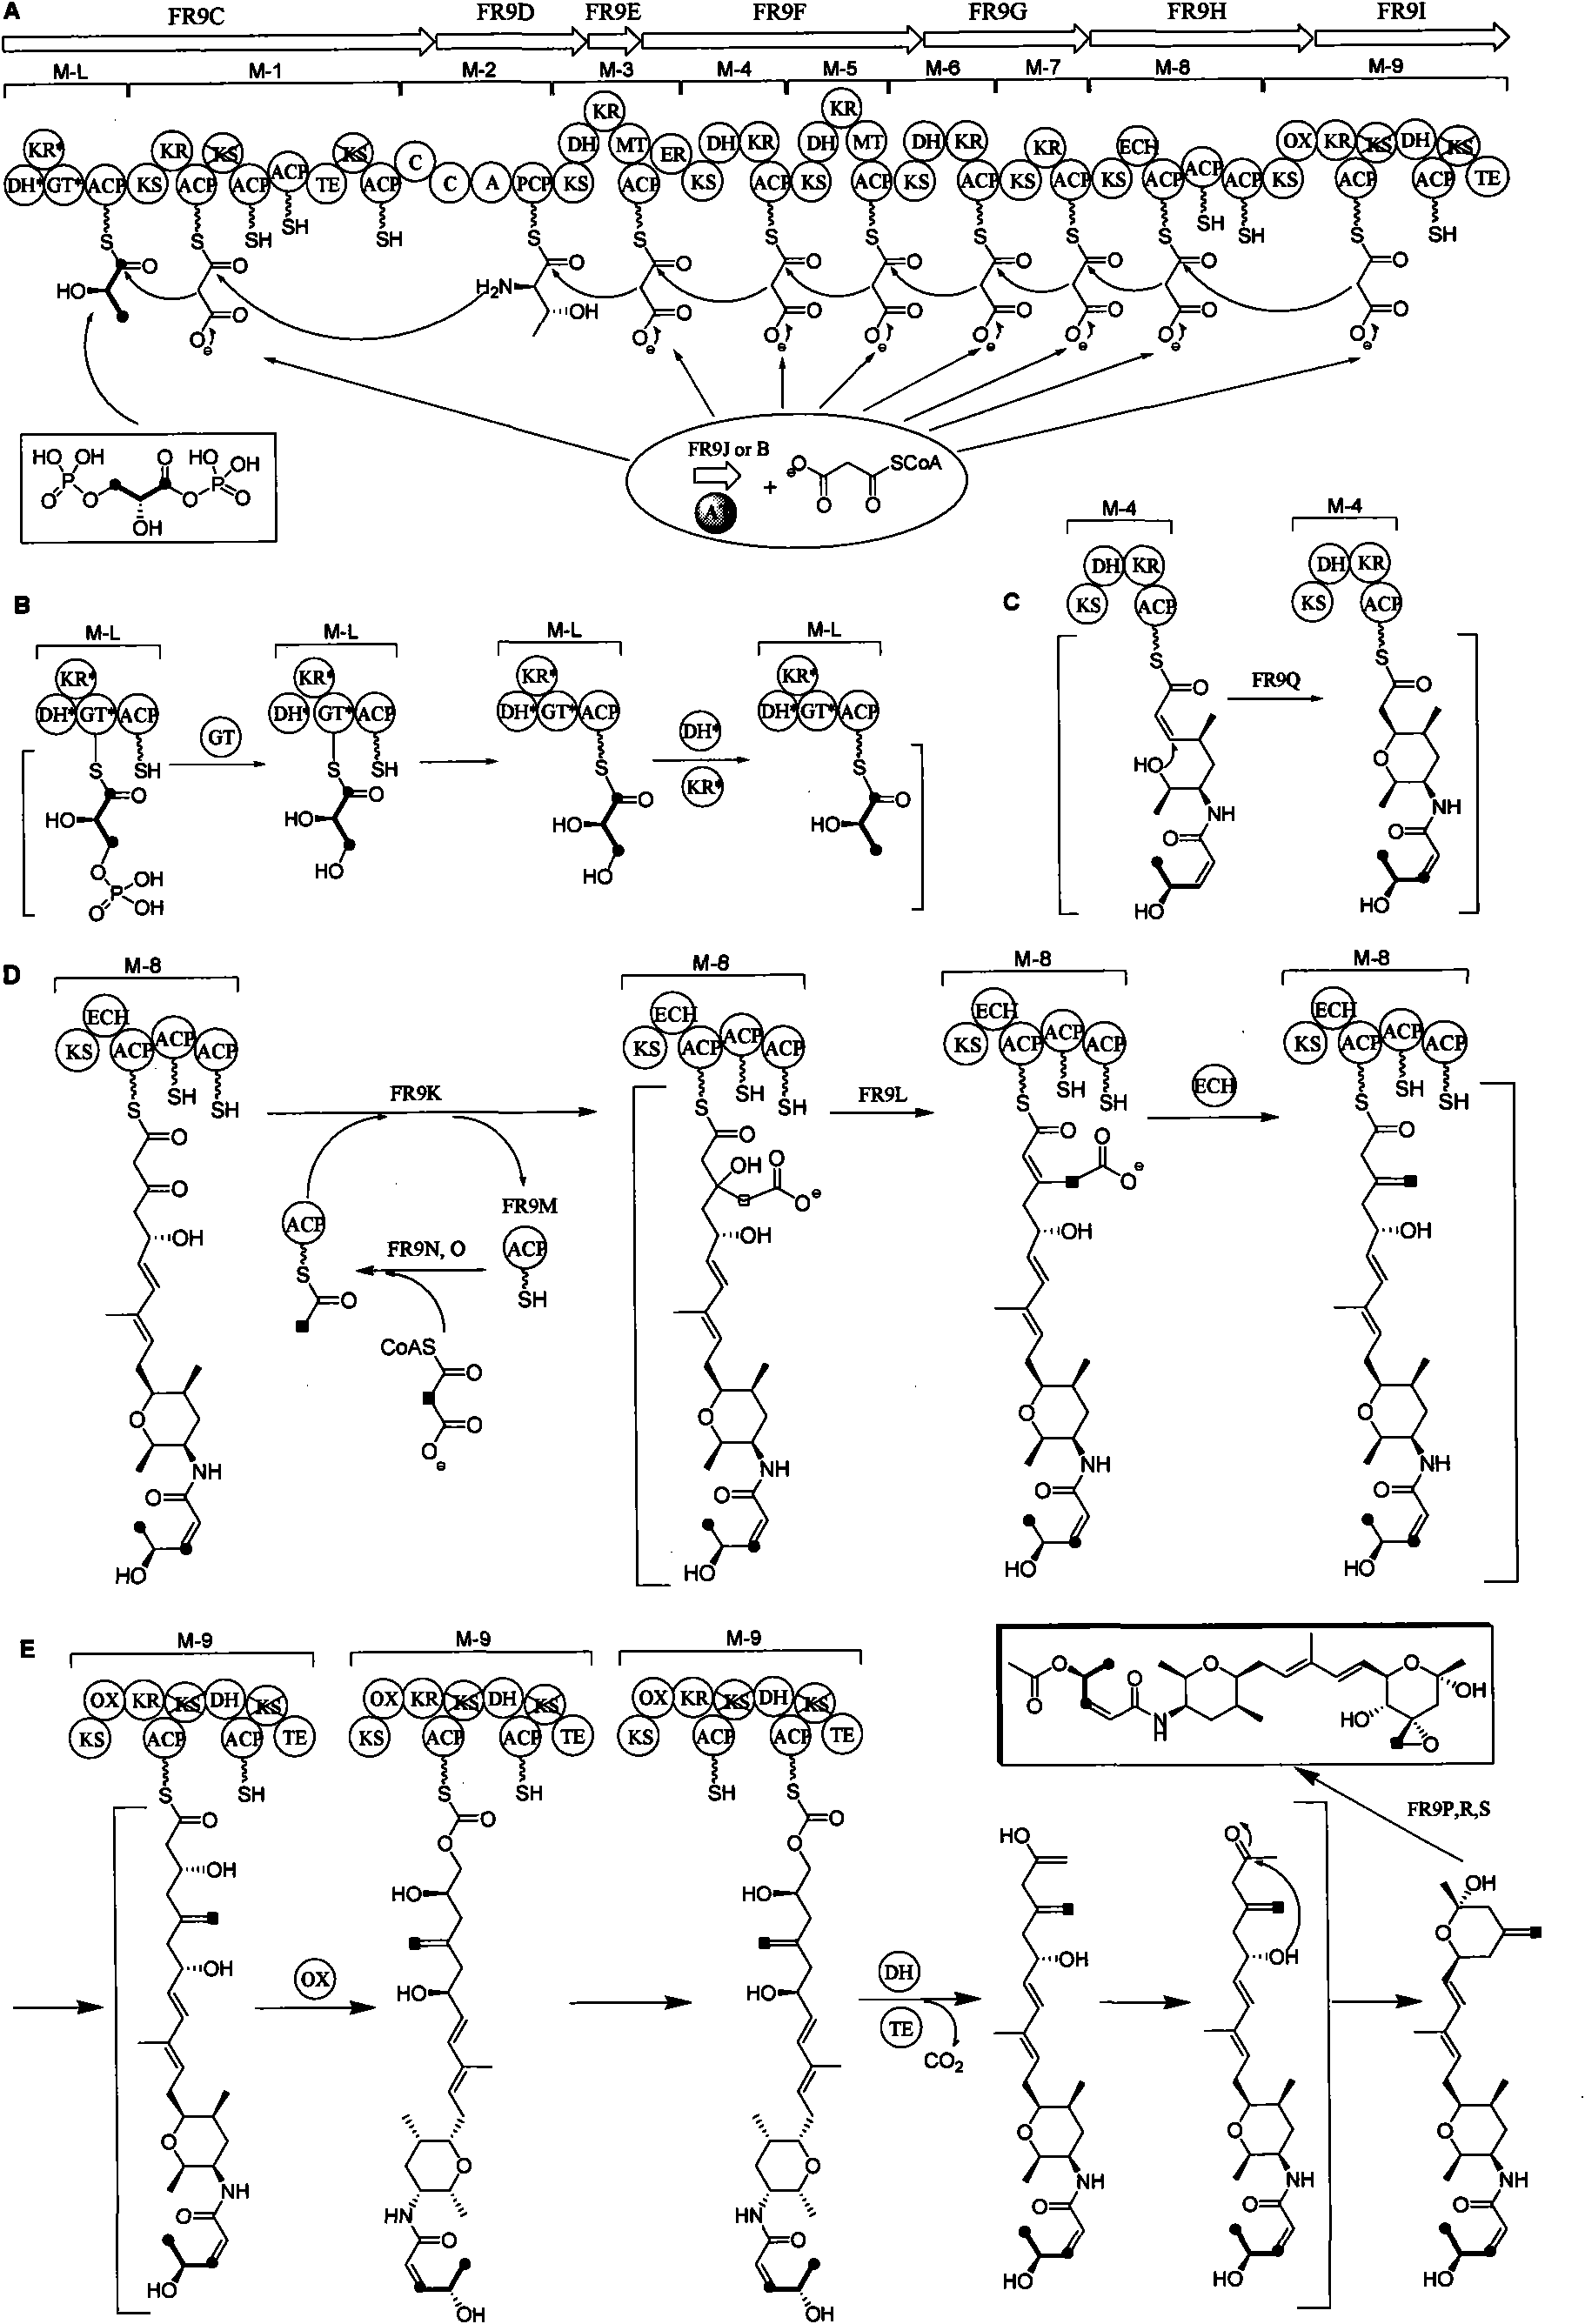 Biosynthetic gene cluster of FR901464